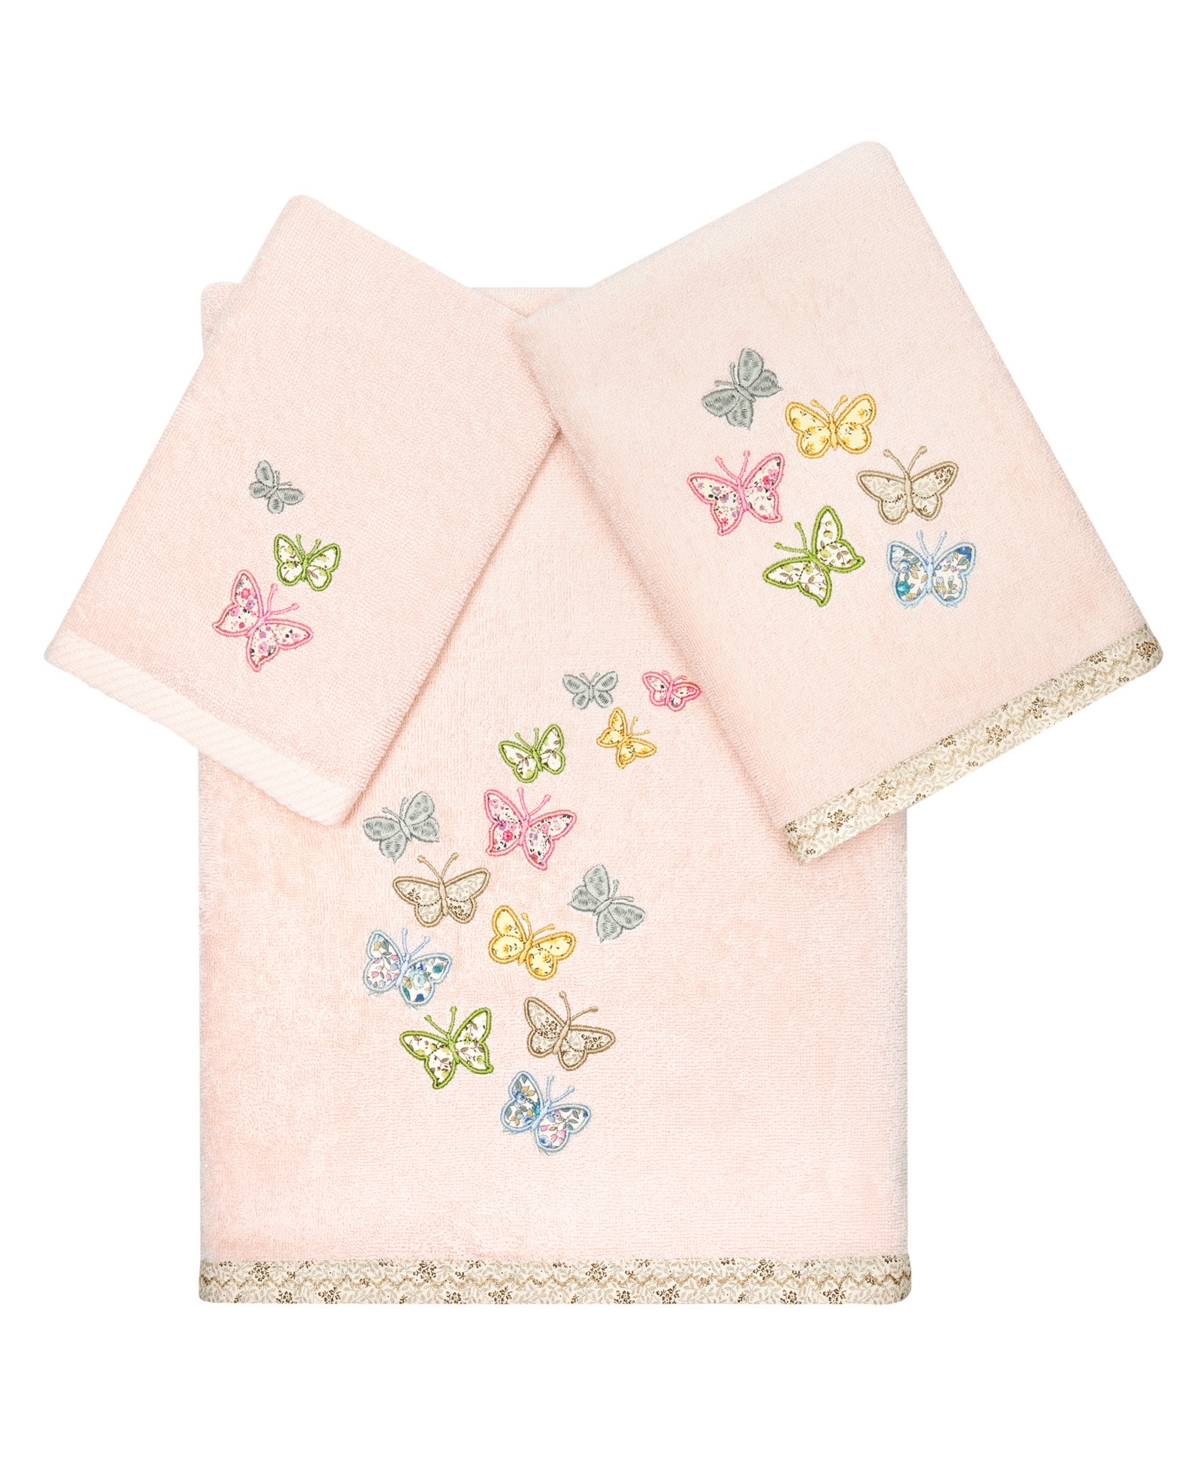 Linum Home Textiles Turkish Cotton Mariposa Embellished Towel Set, 3 Piece In Blush